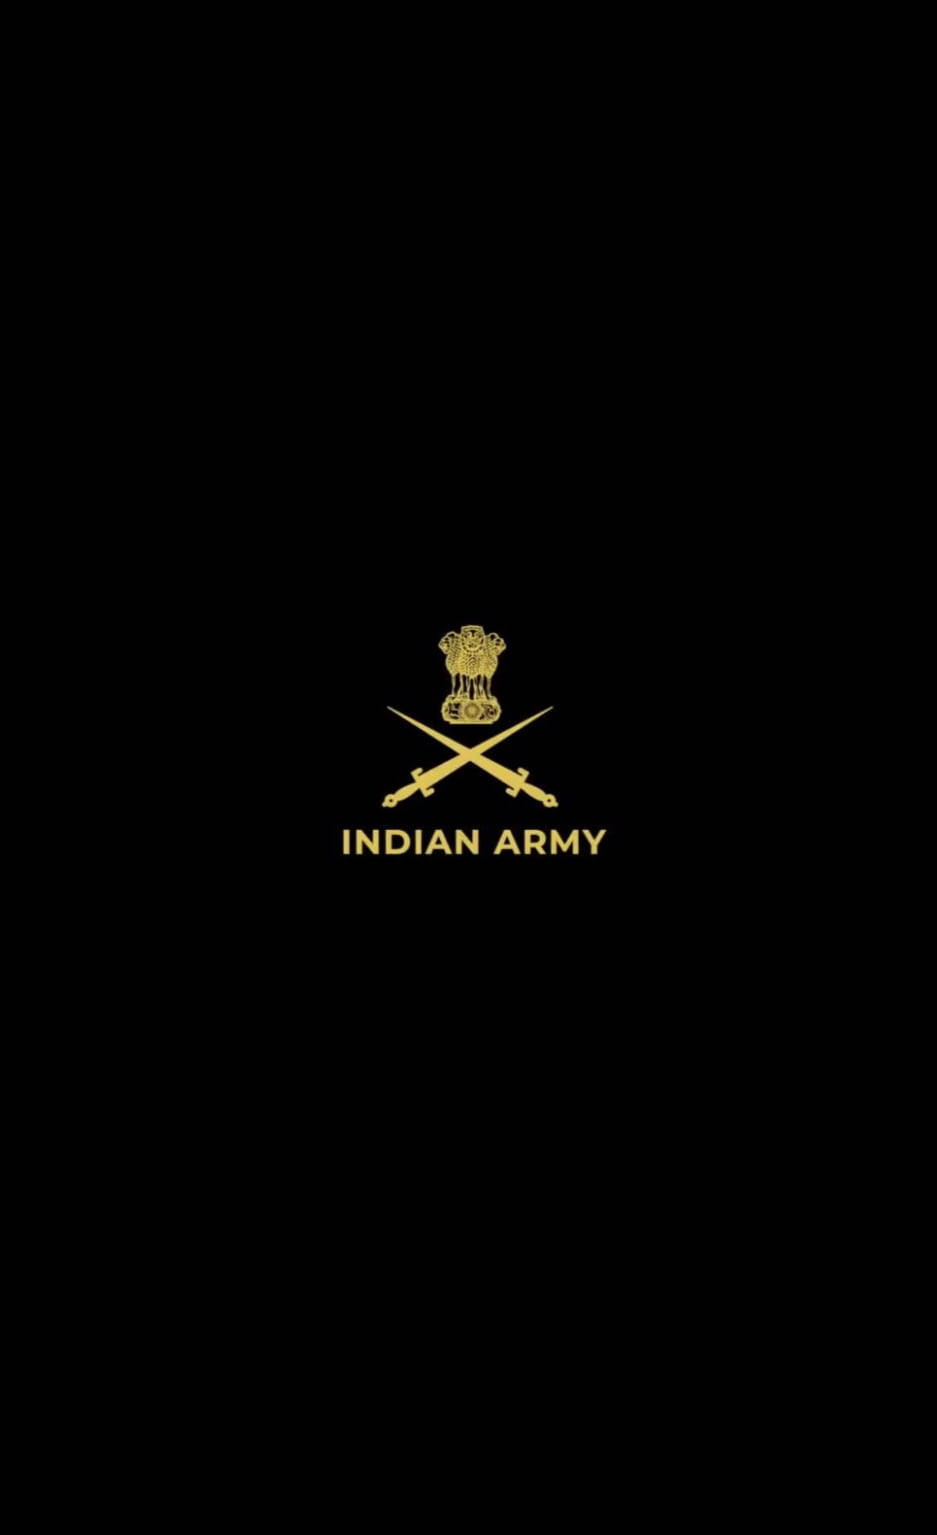 Indian Army Logo Minimalist Background